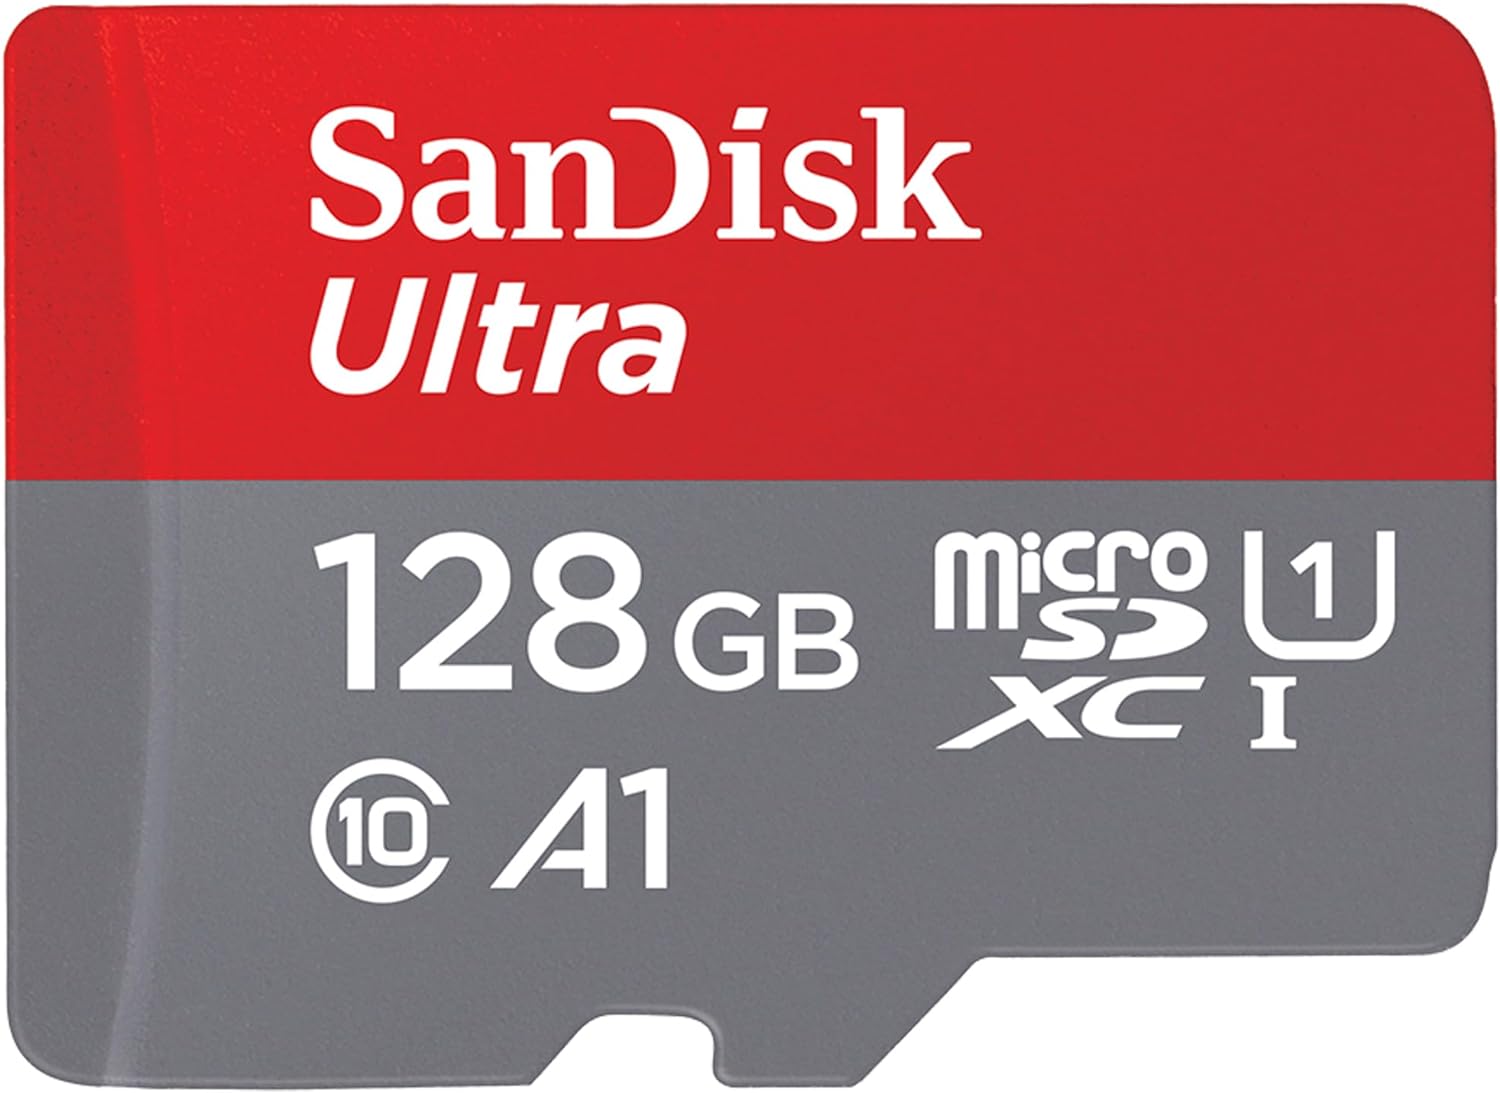 SanDisk 128GB Ultra microSDXC UHS-I Memory Card with Adapter $14.79 @ Amazon